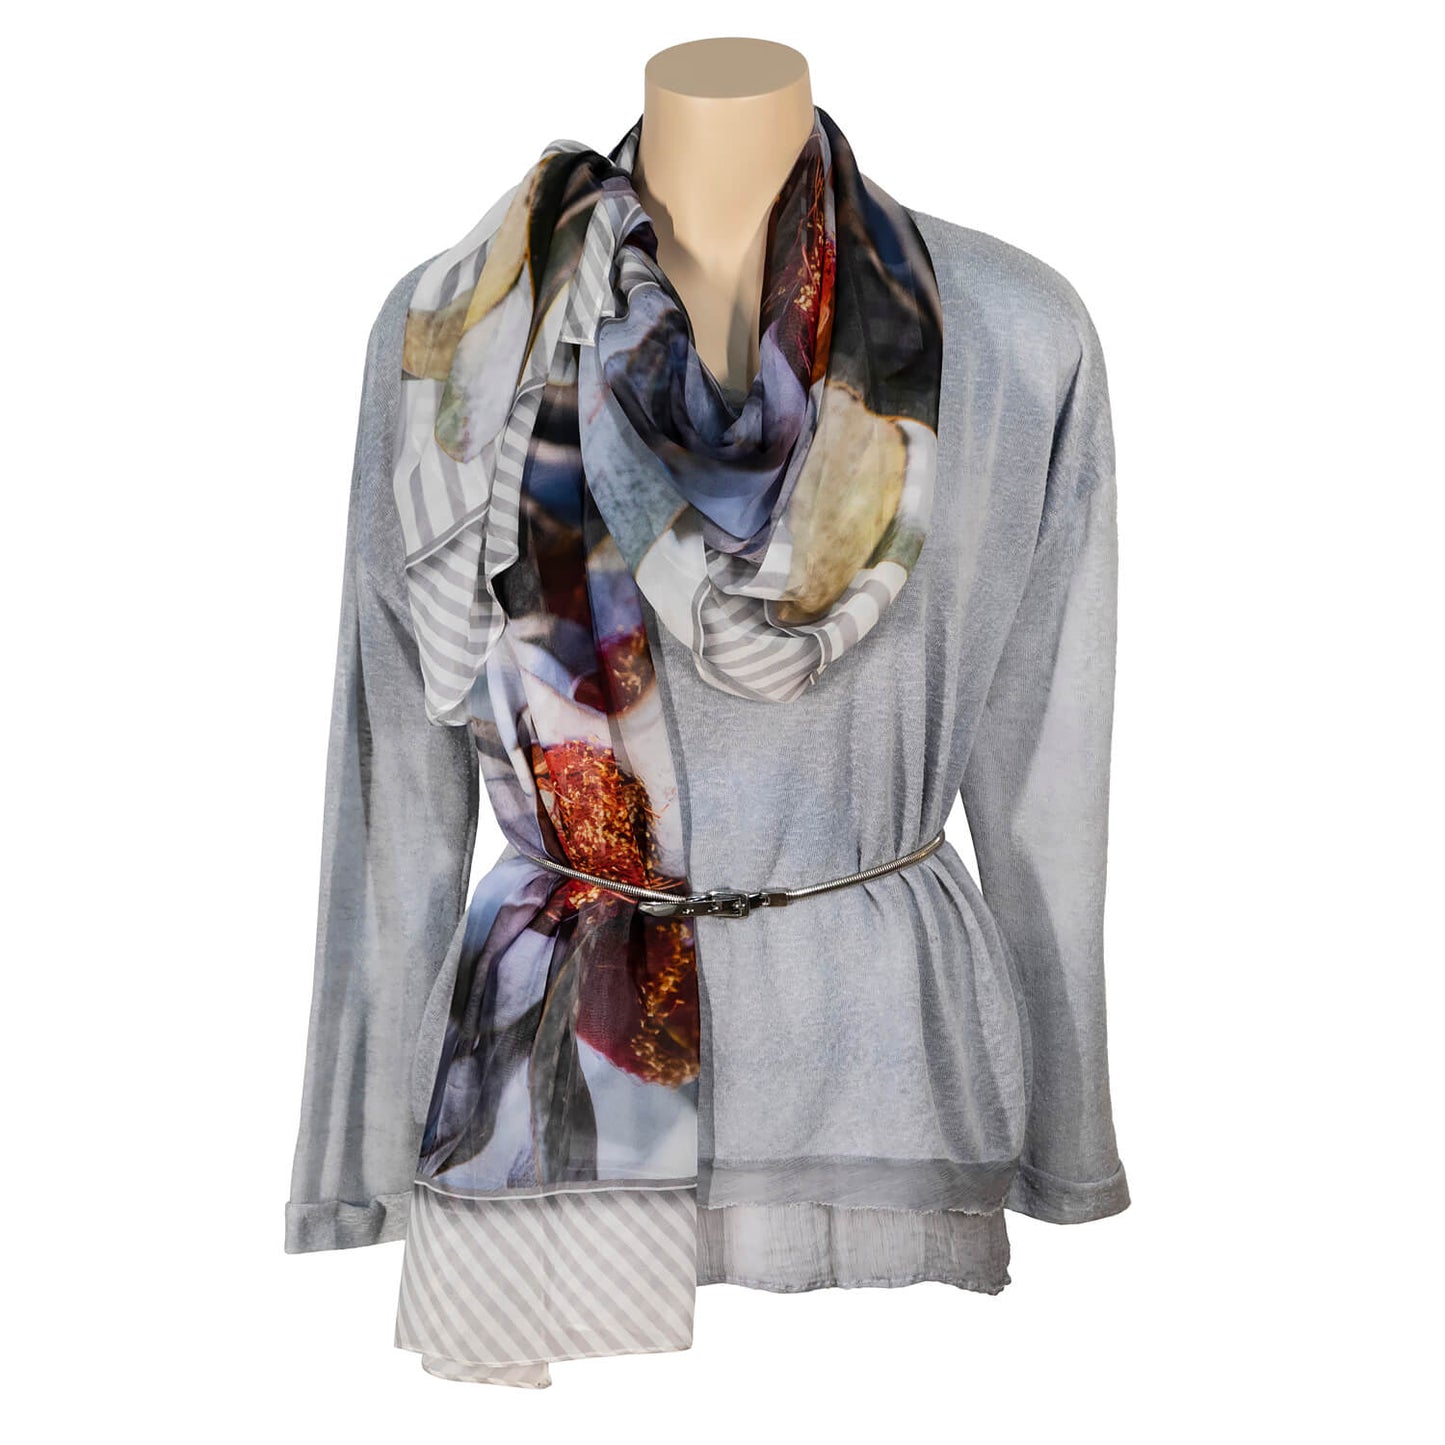 macrocarpa silk scarf worn with grey top & belt